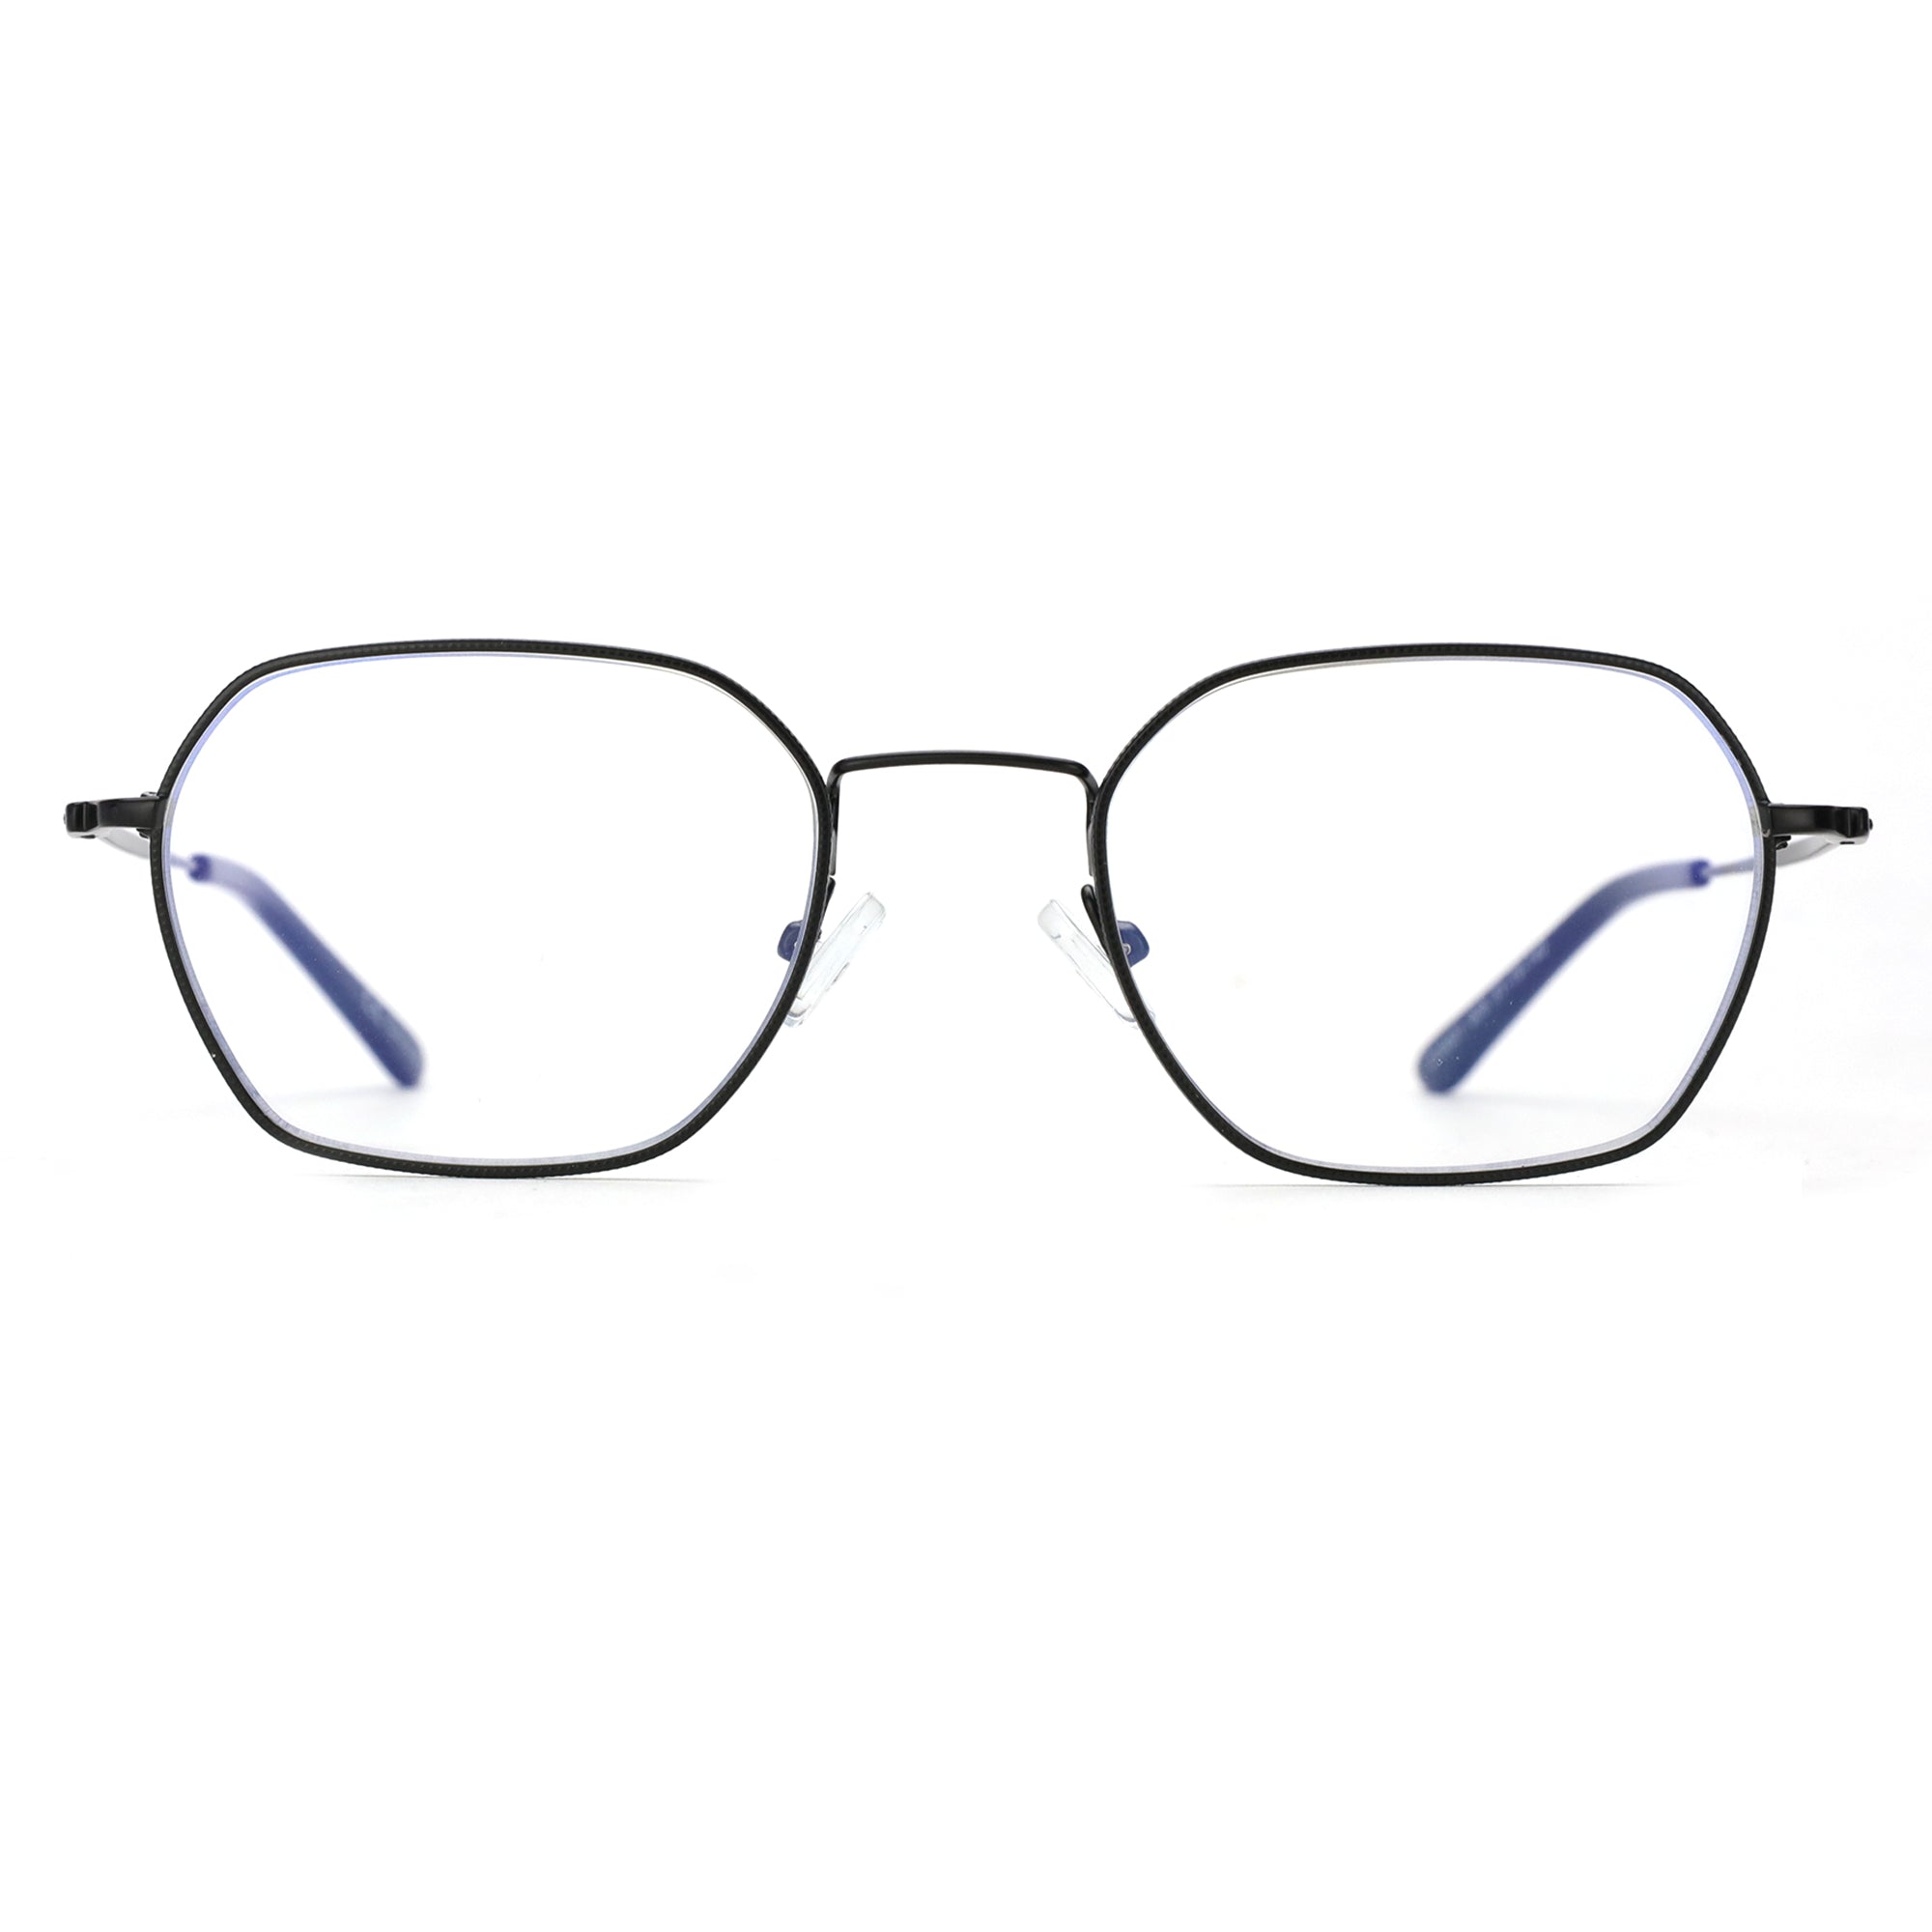 Zenottic Blue Light Blocking Glasses 